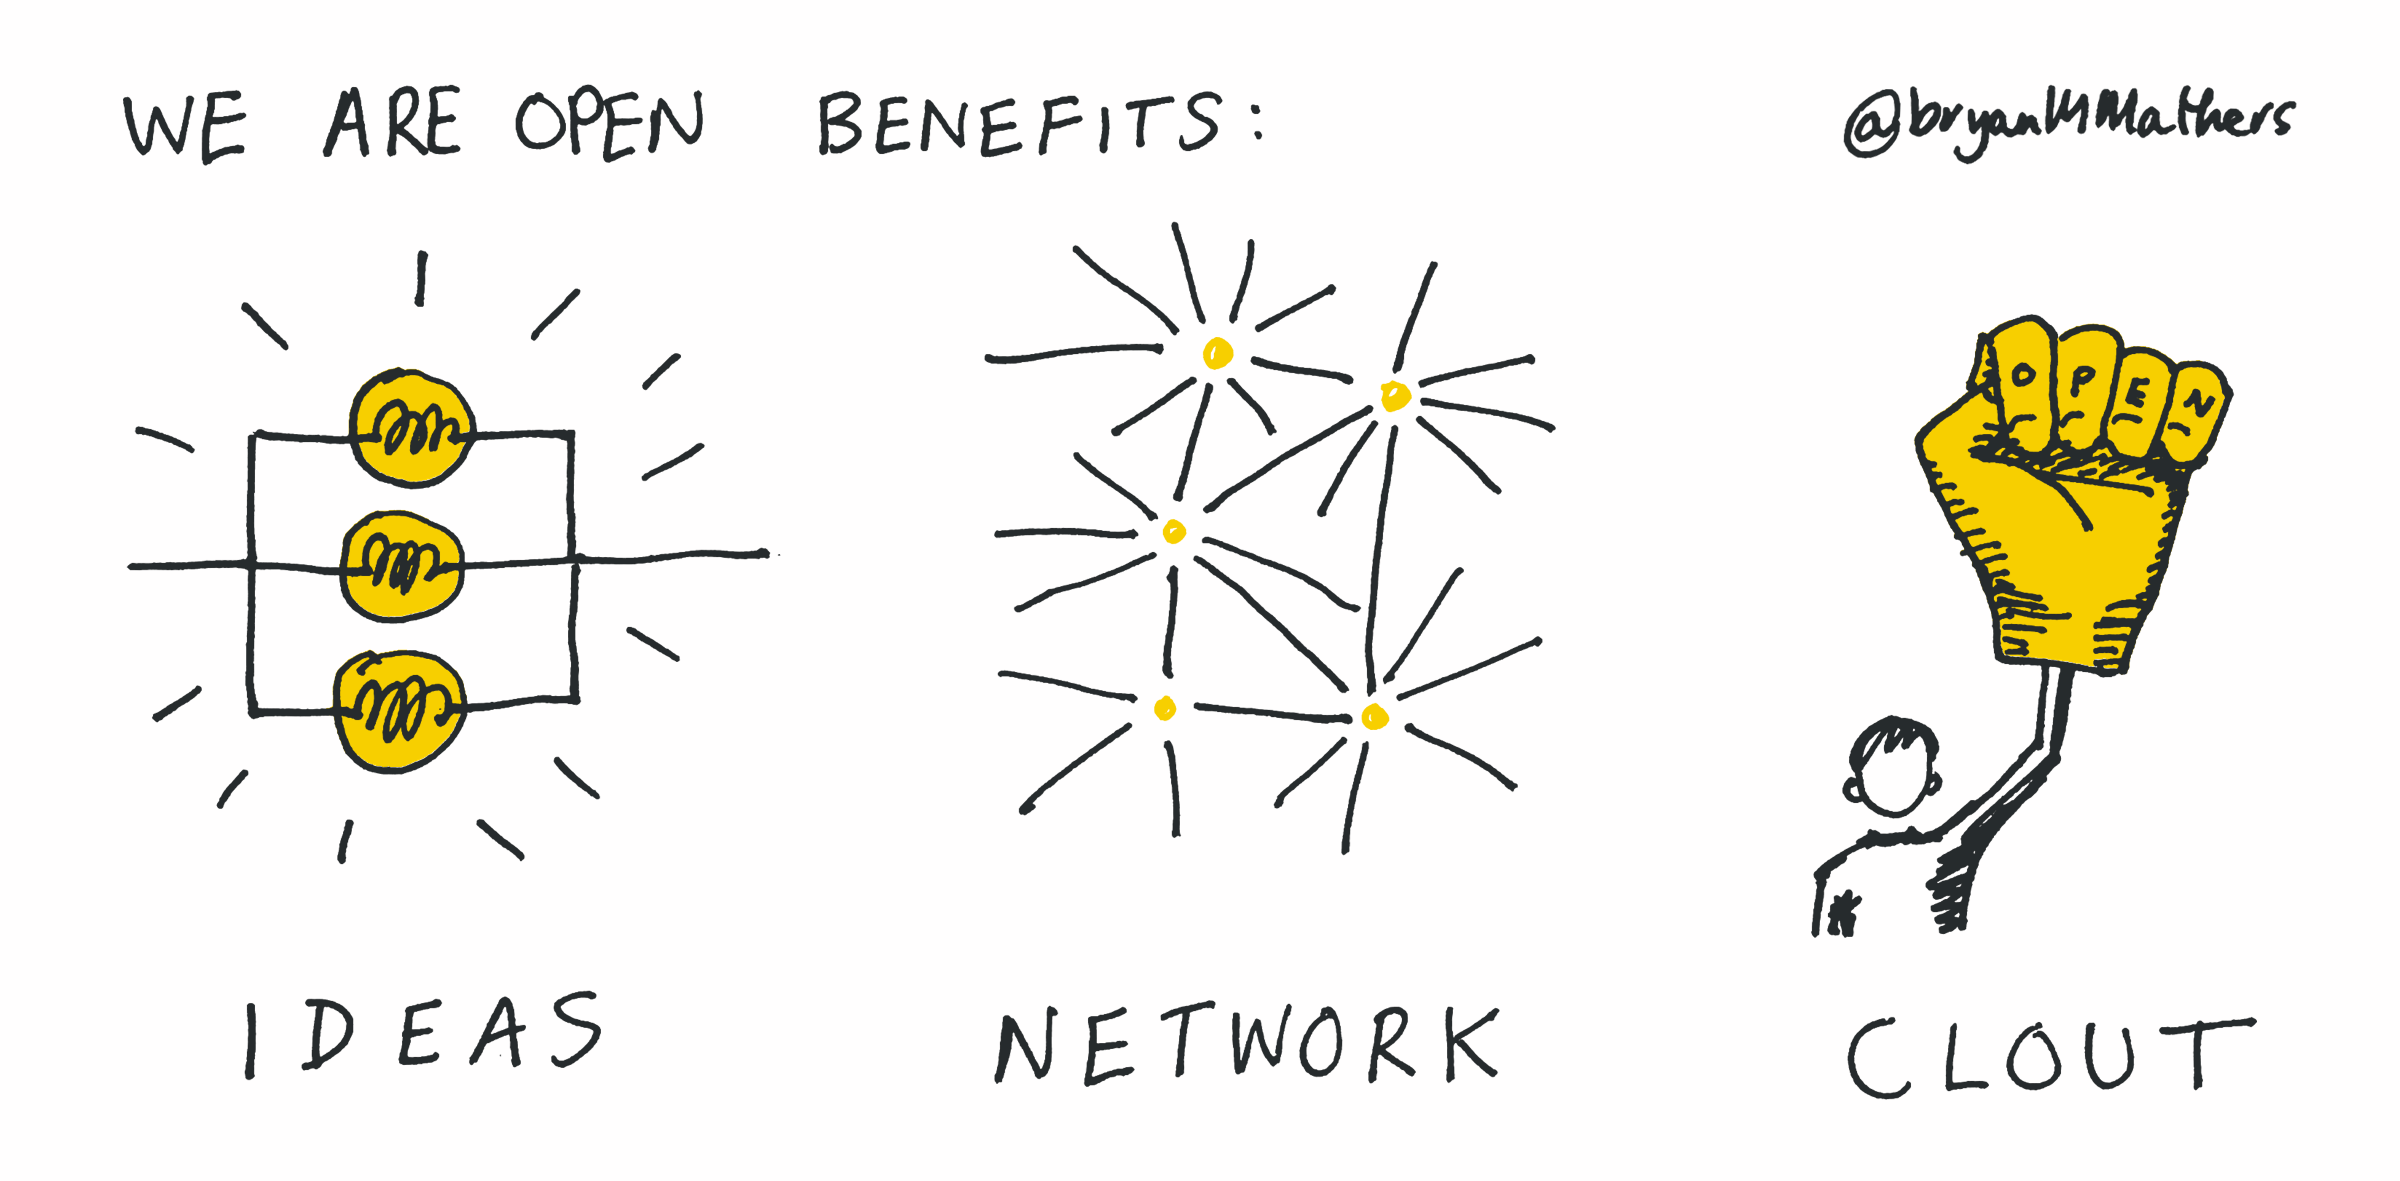 Co-operative Member benefits